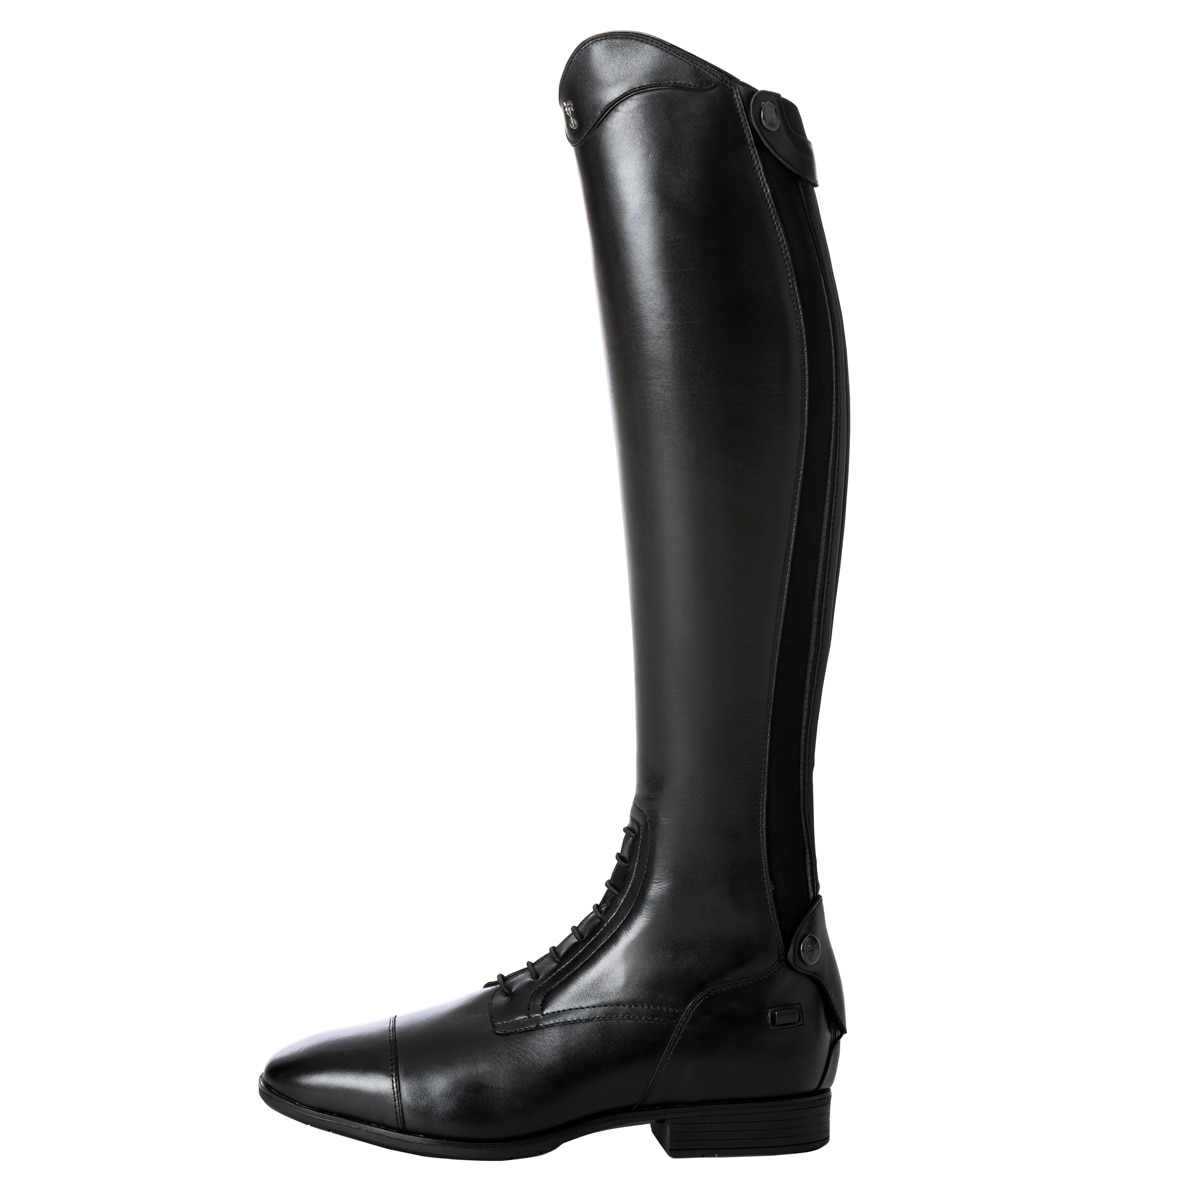 Tredstep Medici Dress Tall Riding Boots in Black